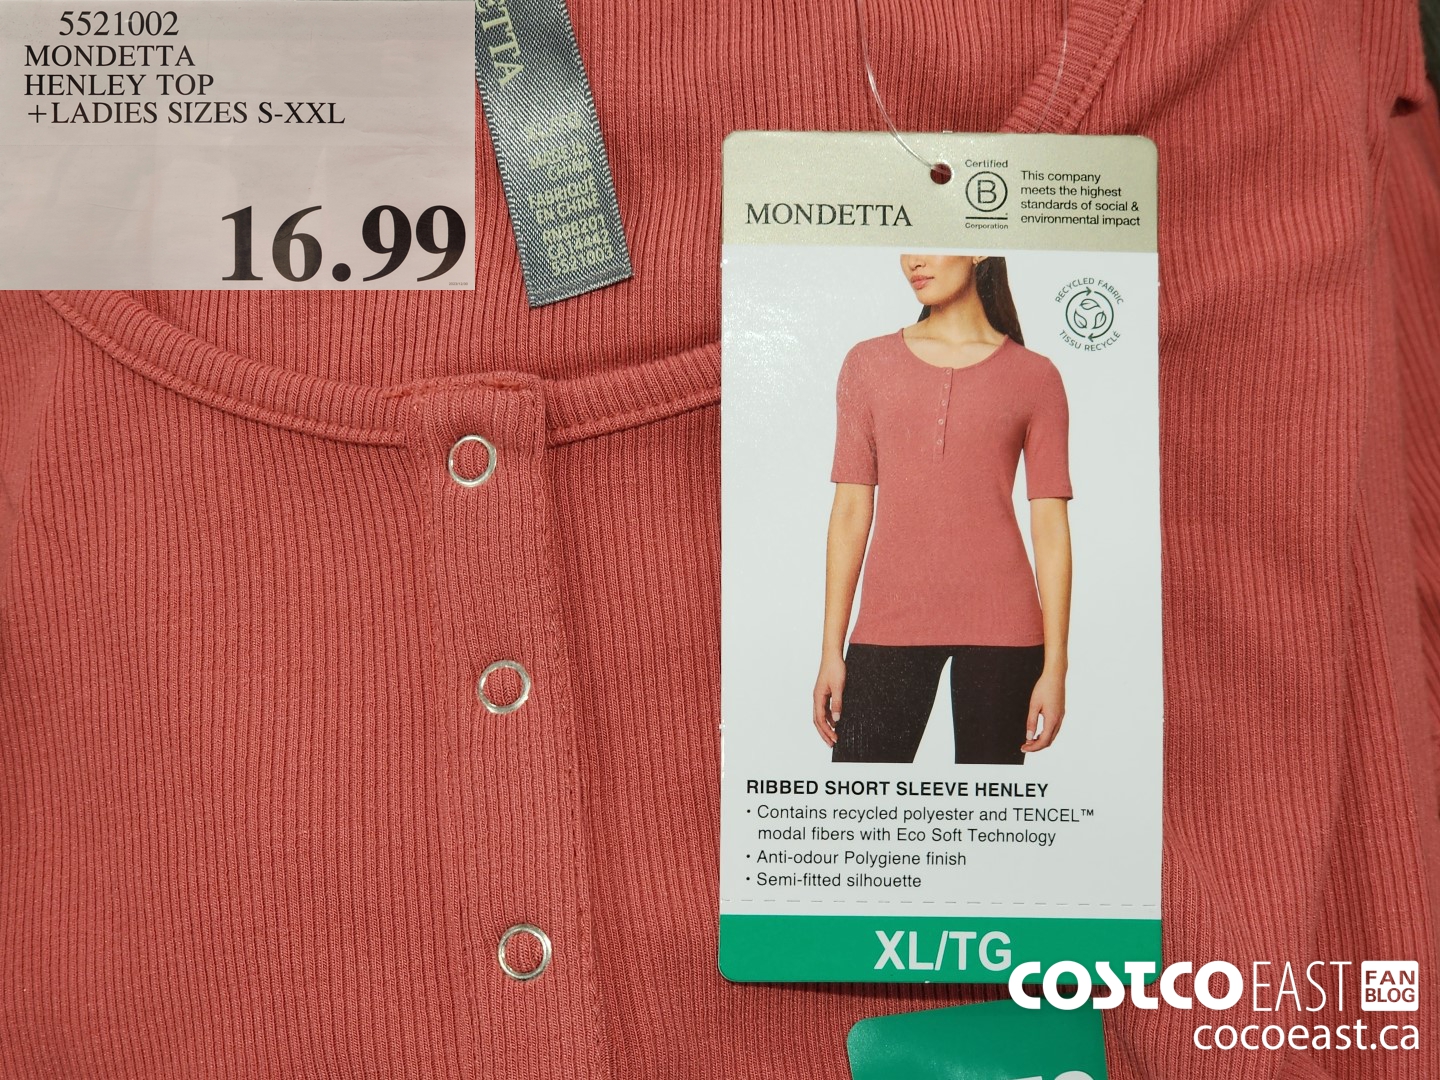 Costco Winter 2023 Clothing Aisle Superpost – Swim, Sweaters &  Undergarments - Costco West Fan Blog